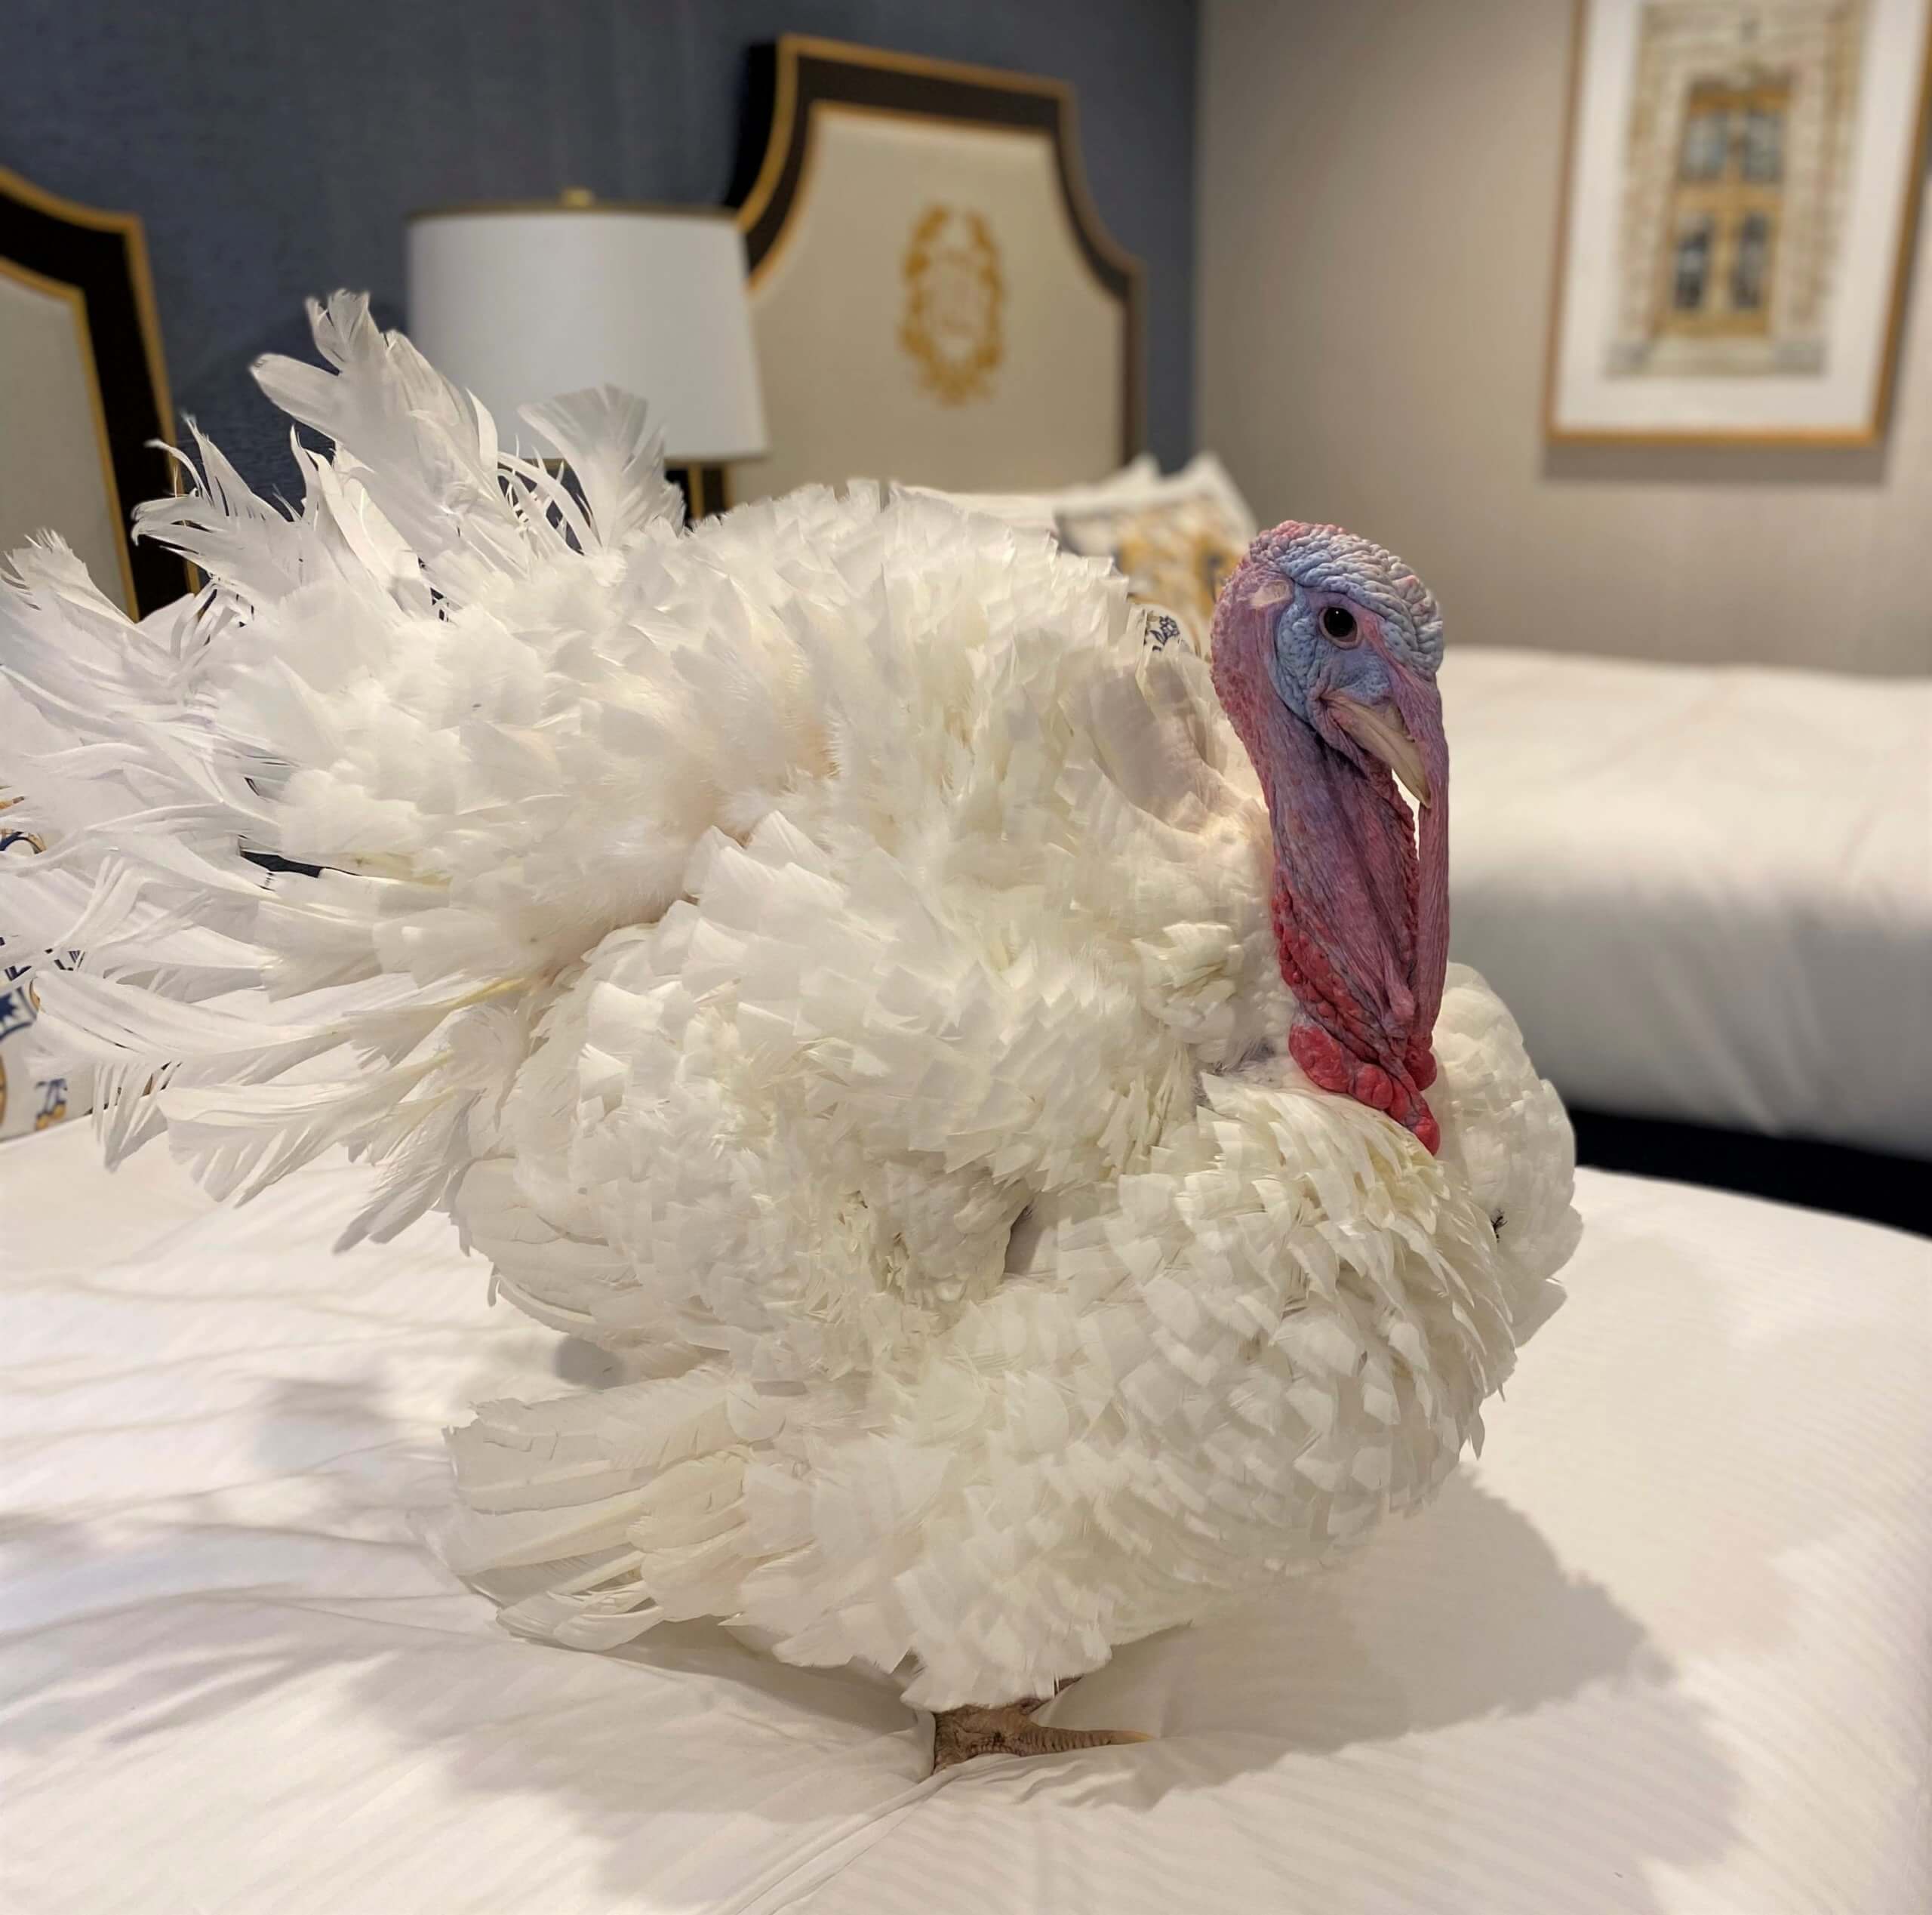 presidential turkeys on bed